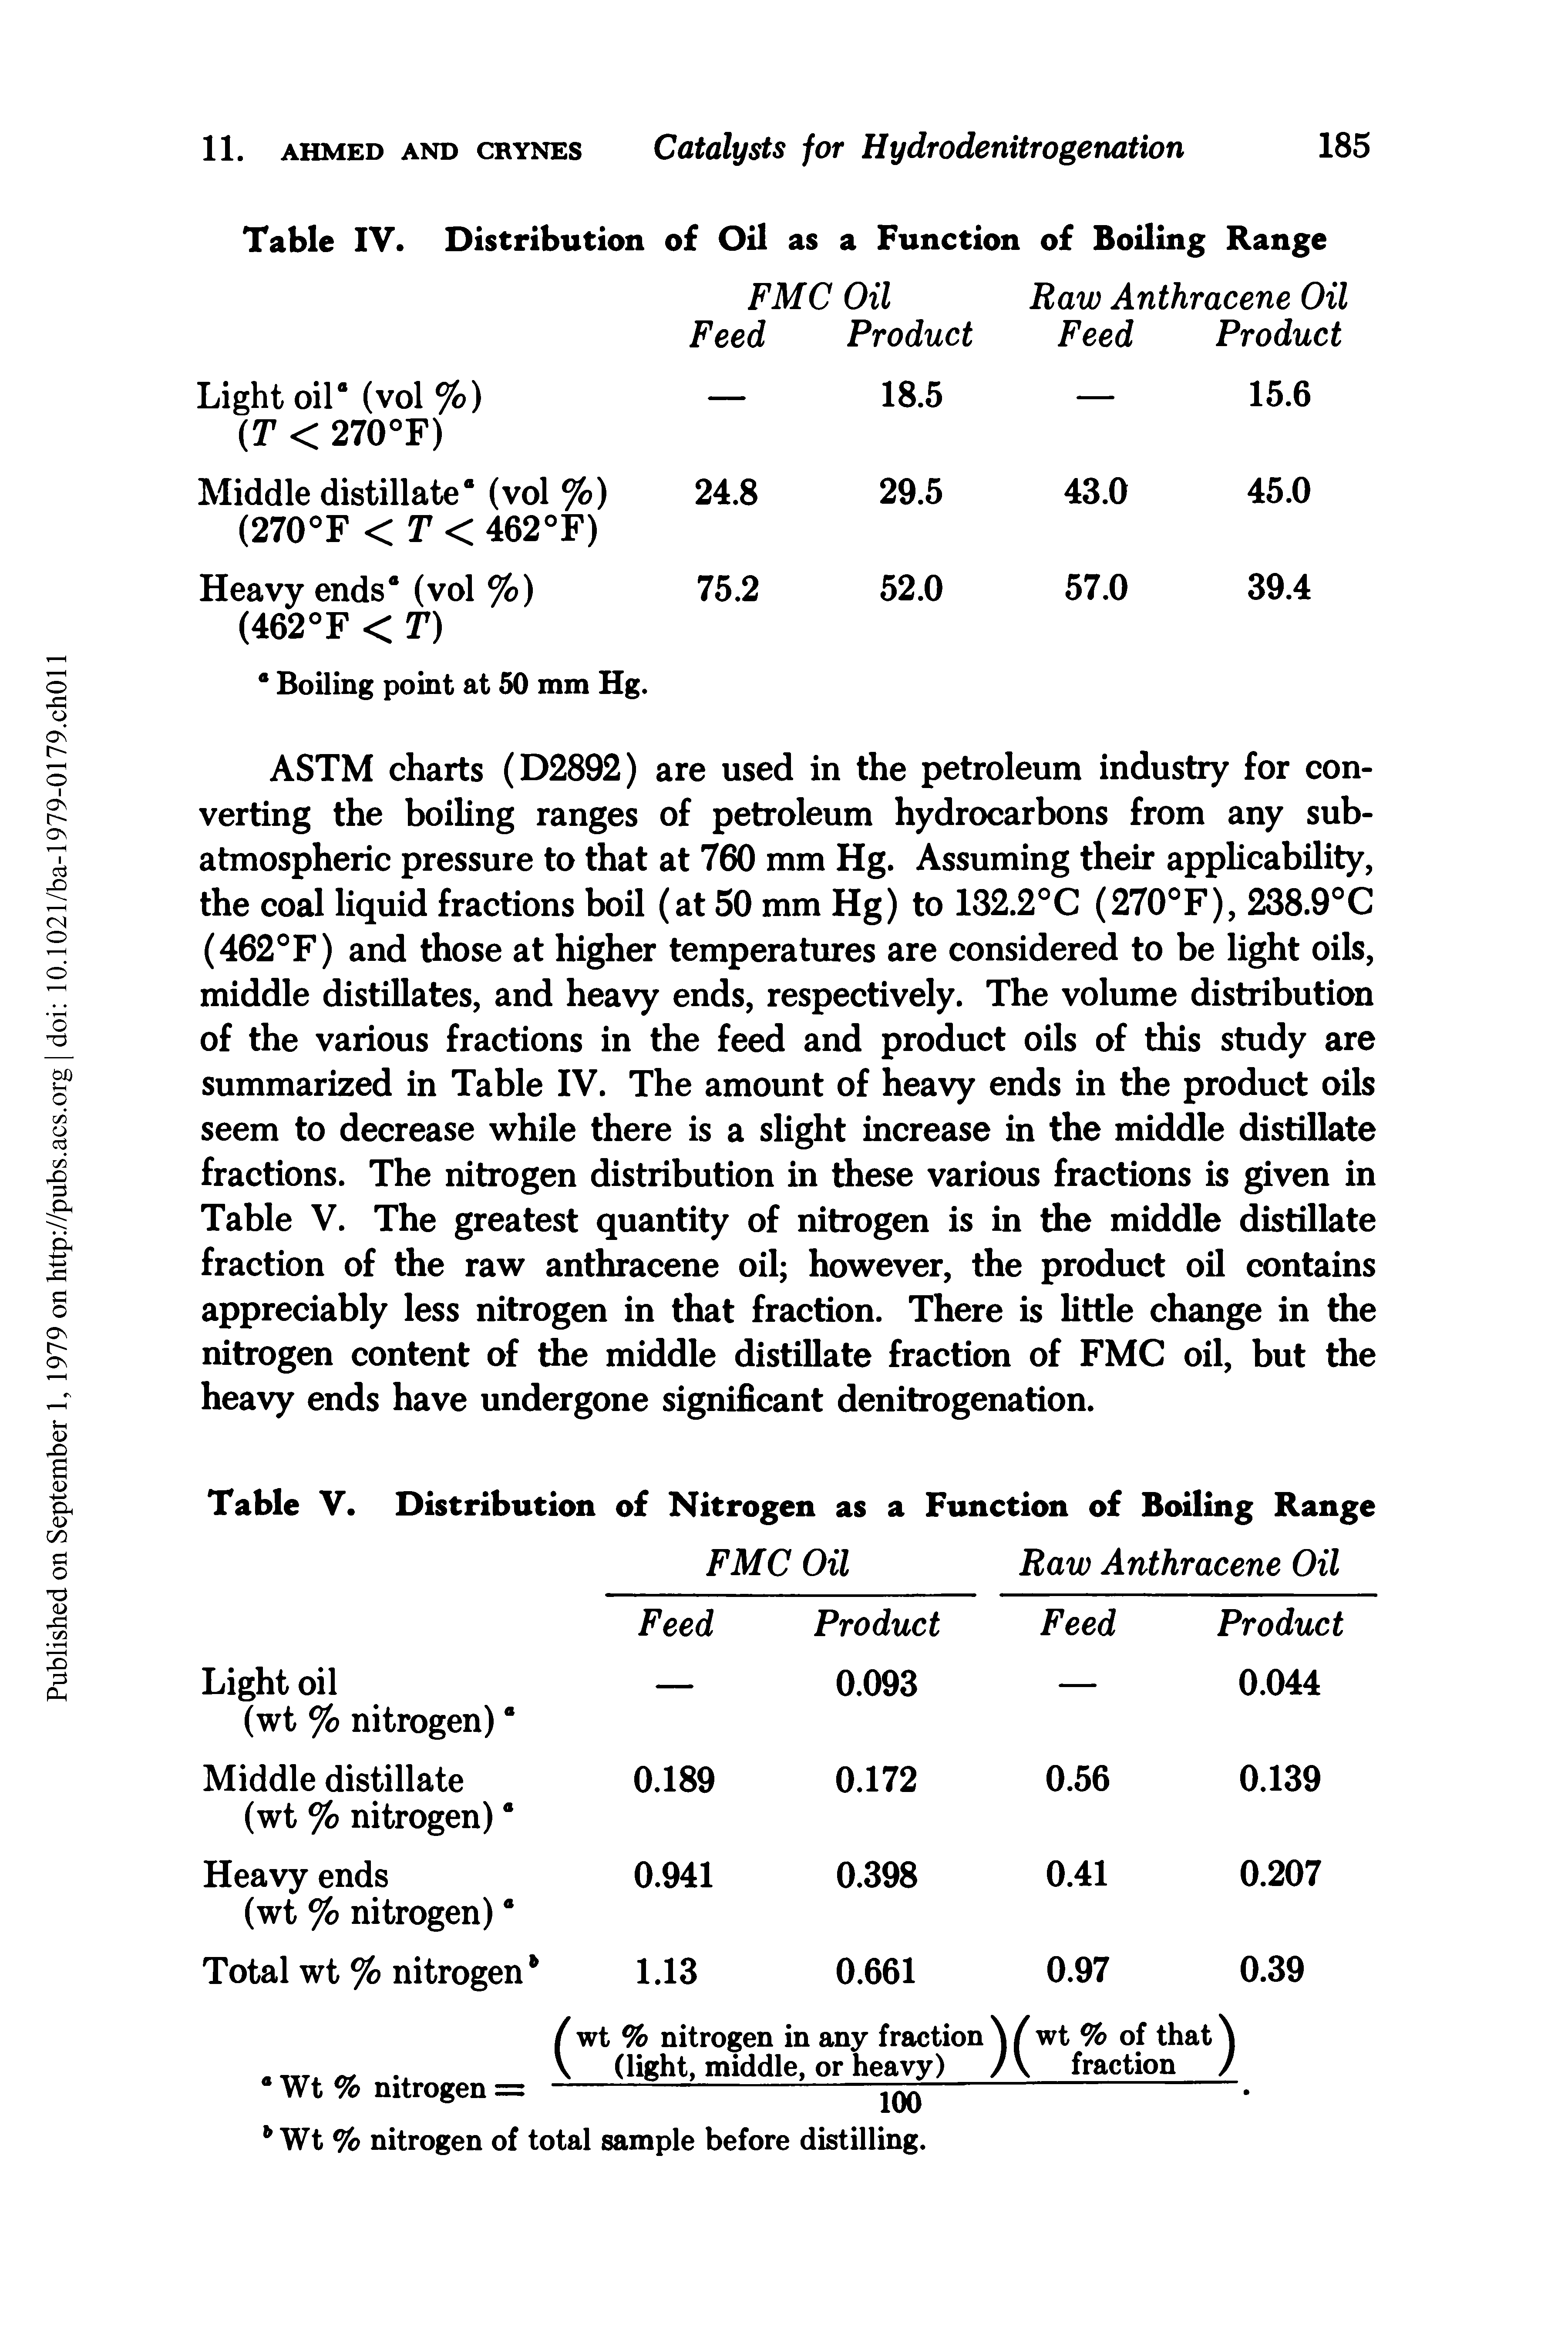 Table V. Distribution of Nitrogen as a Function of Boiling Range...